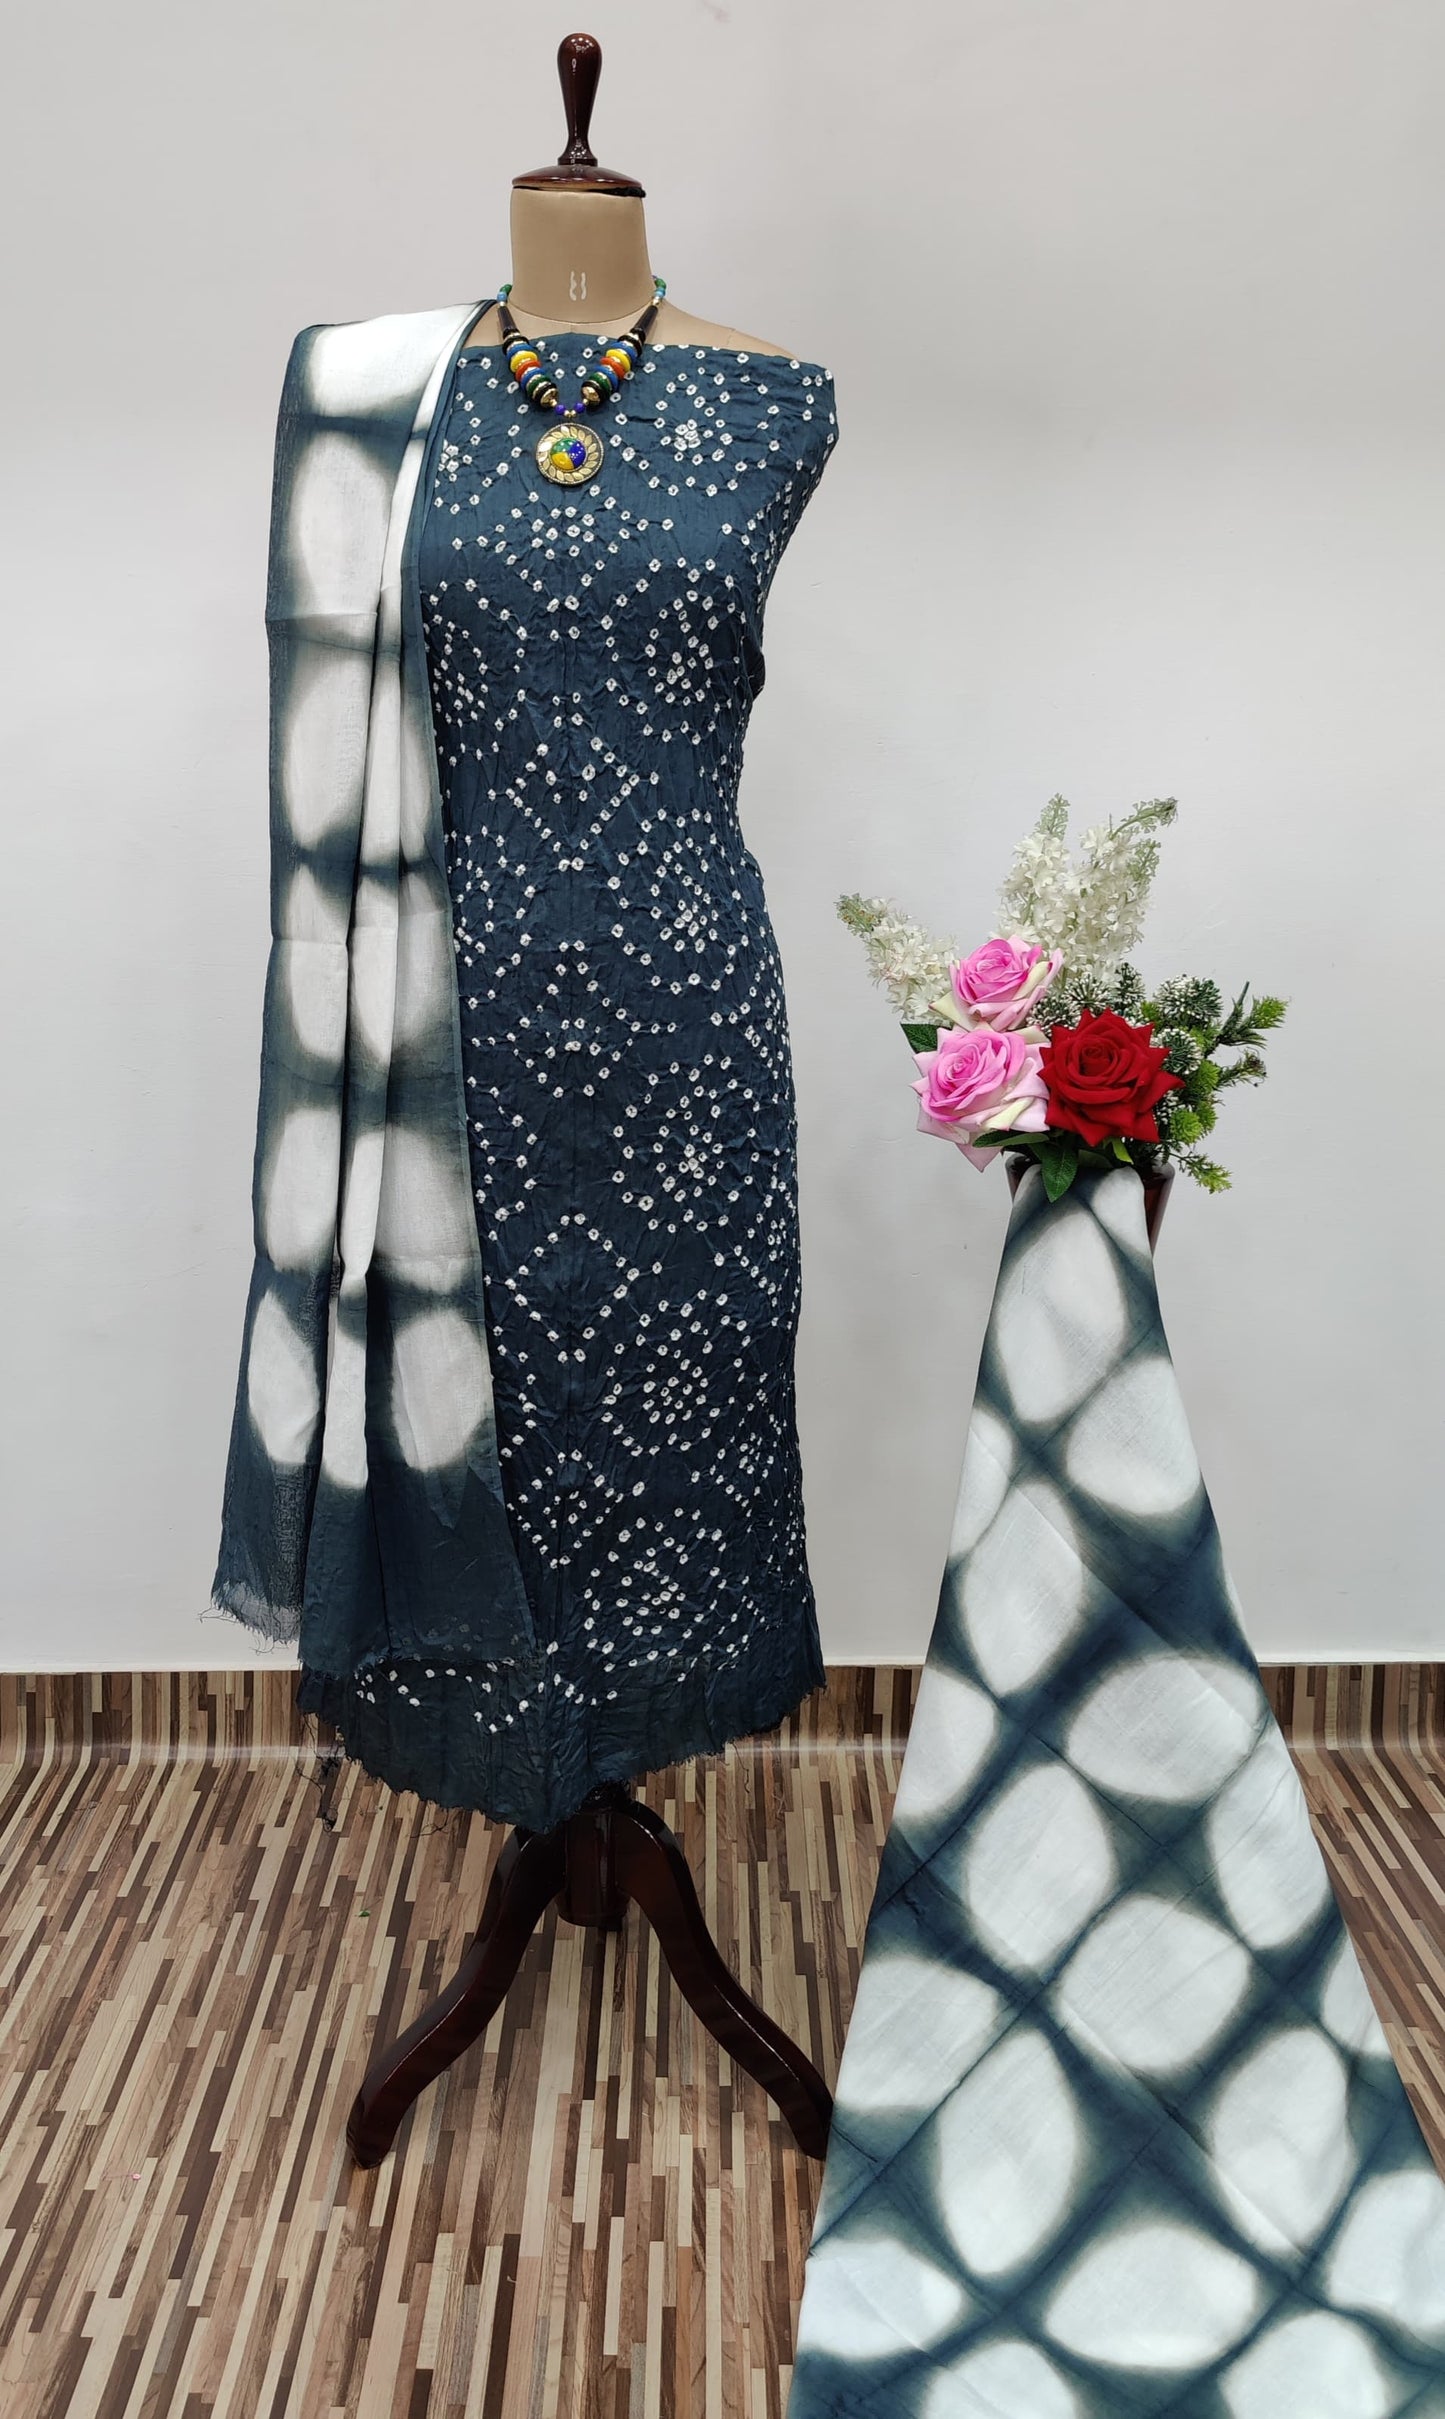 Cotton Kutch Bandhani Dress Material - Premium  from Ethenika.com  - Just INR 2190! Shop now at Ethenika.com 